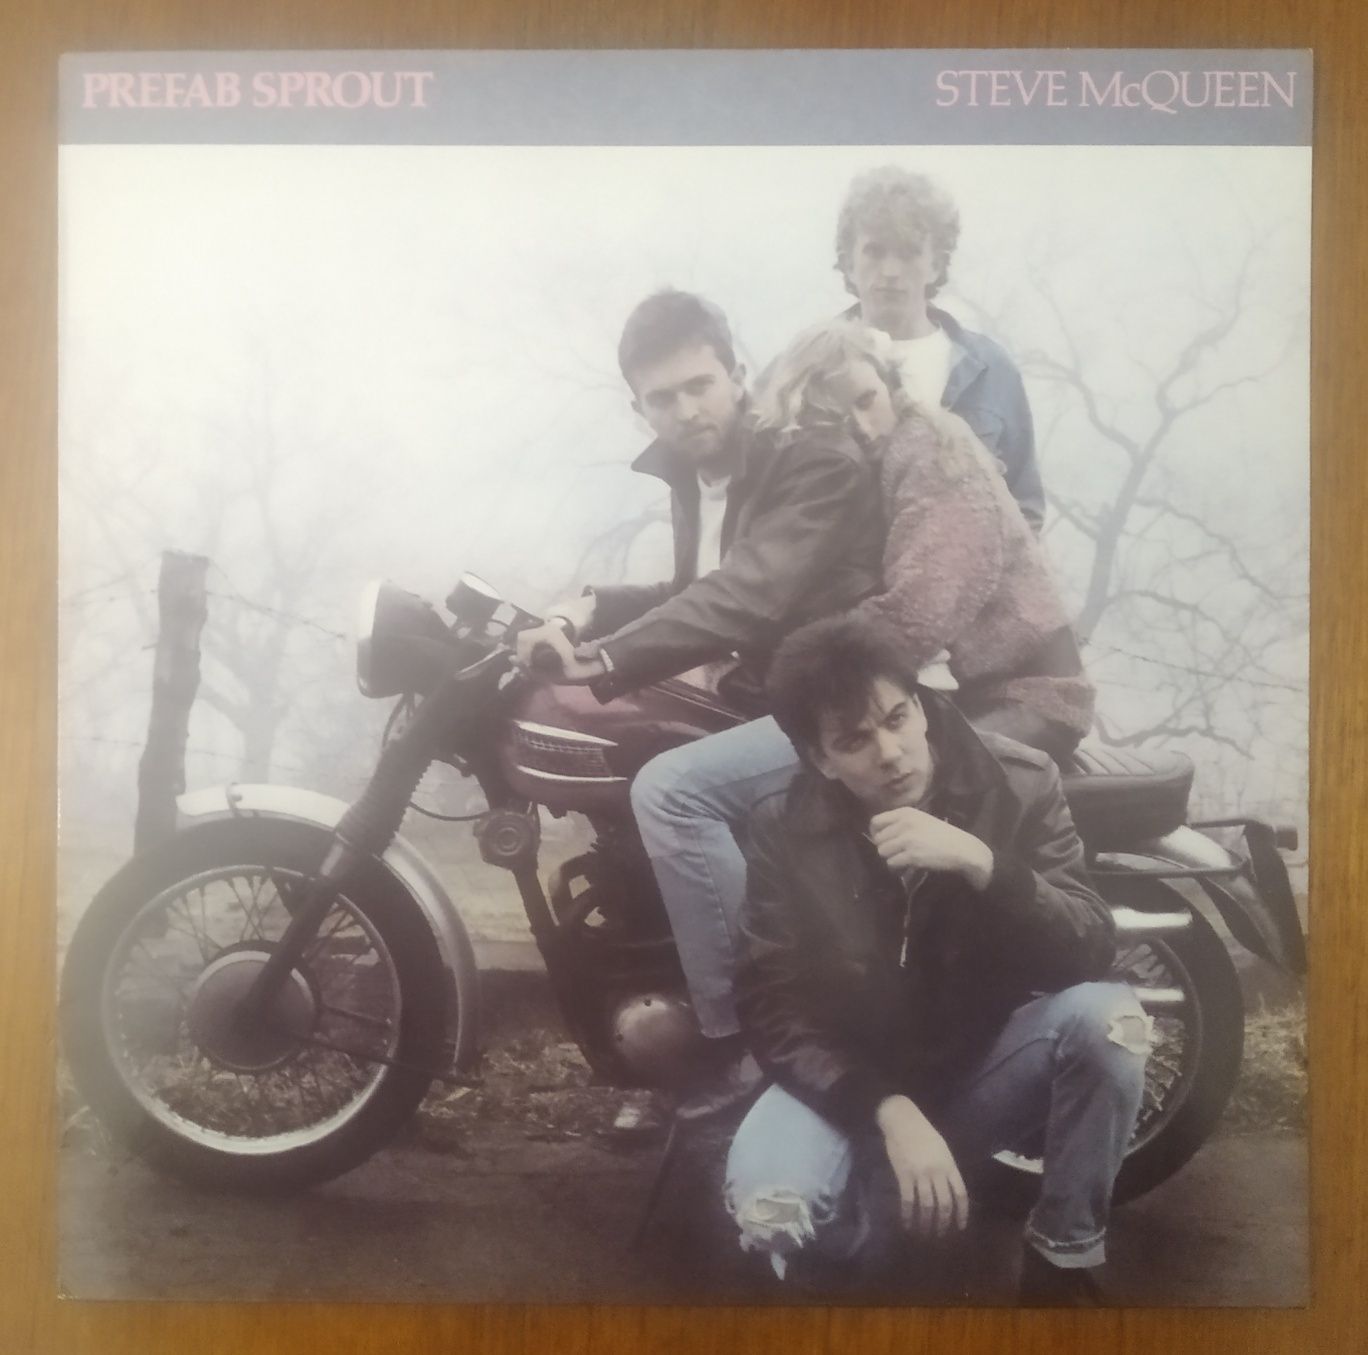 Prefab Sprout disco de vinil "Steve McQueen"